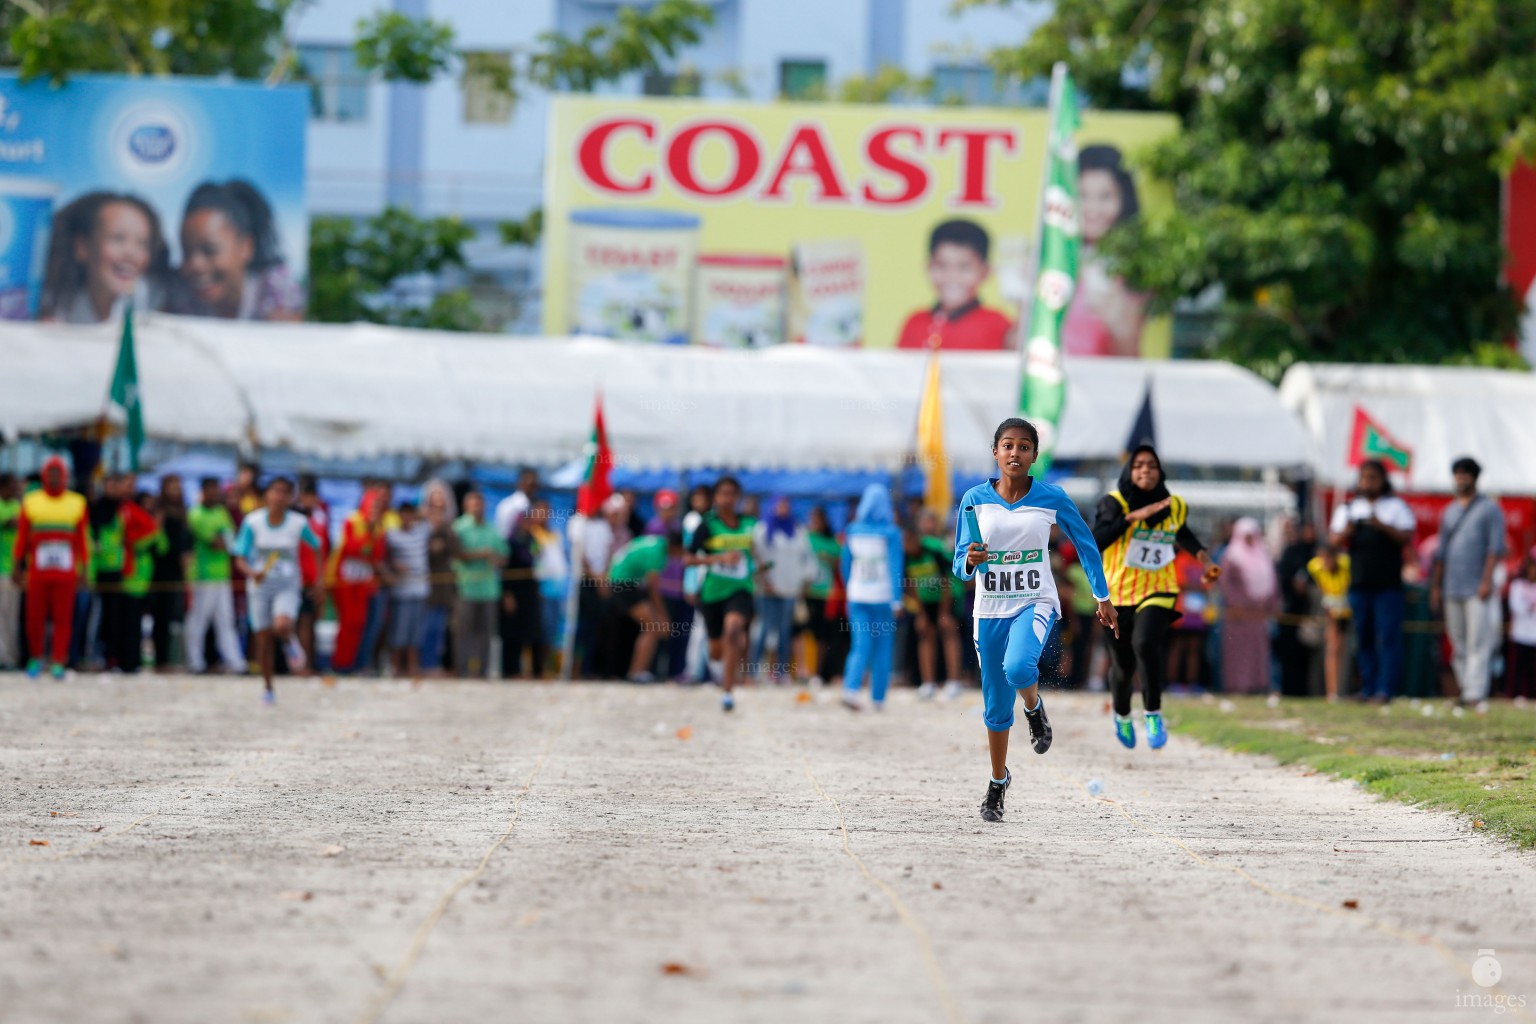 Milo Interschool AthleticsTournament in Male', Maldives, Monday, September. 05 , 2016. (Images.mv Photo/ Hussain Sinan).